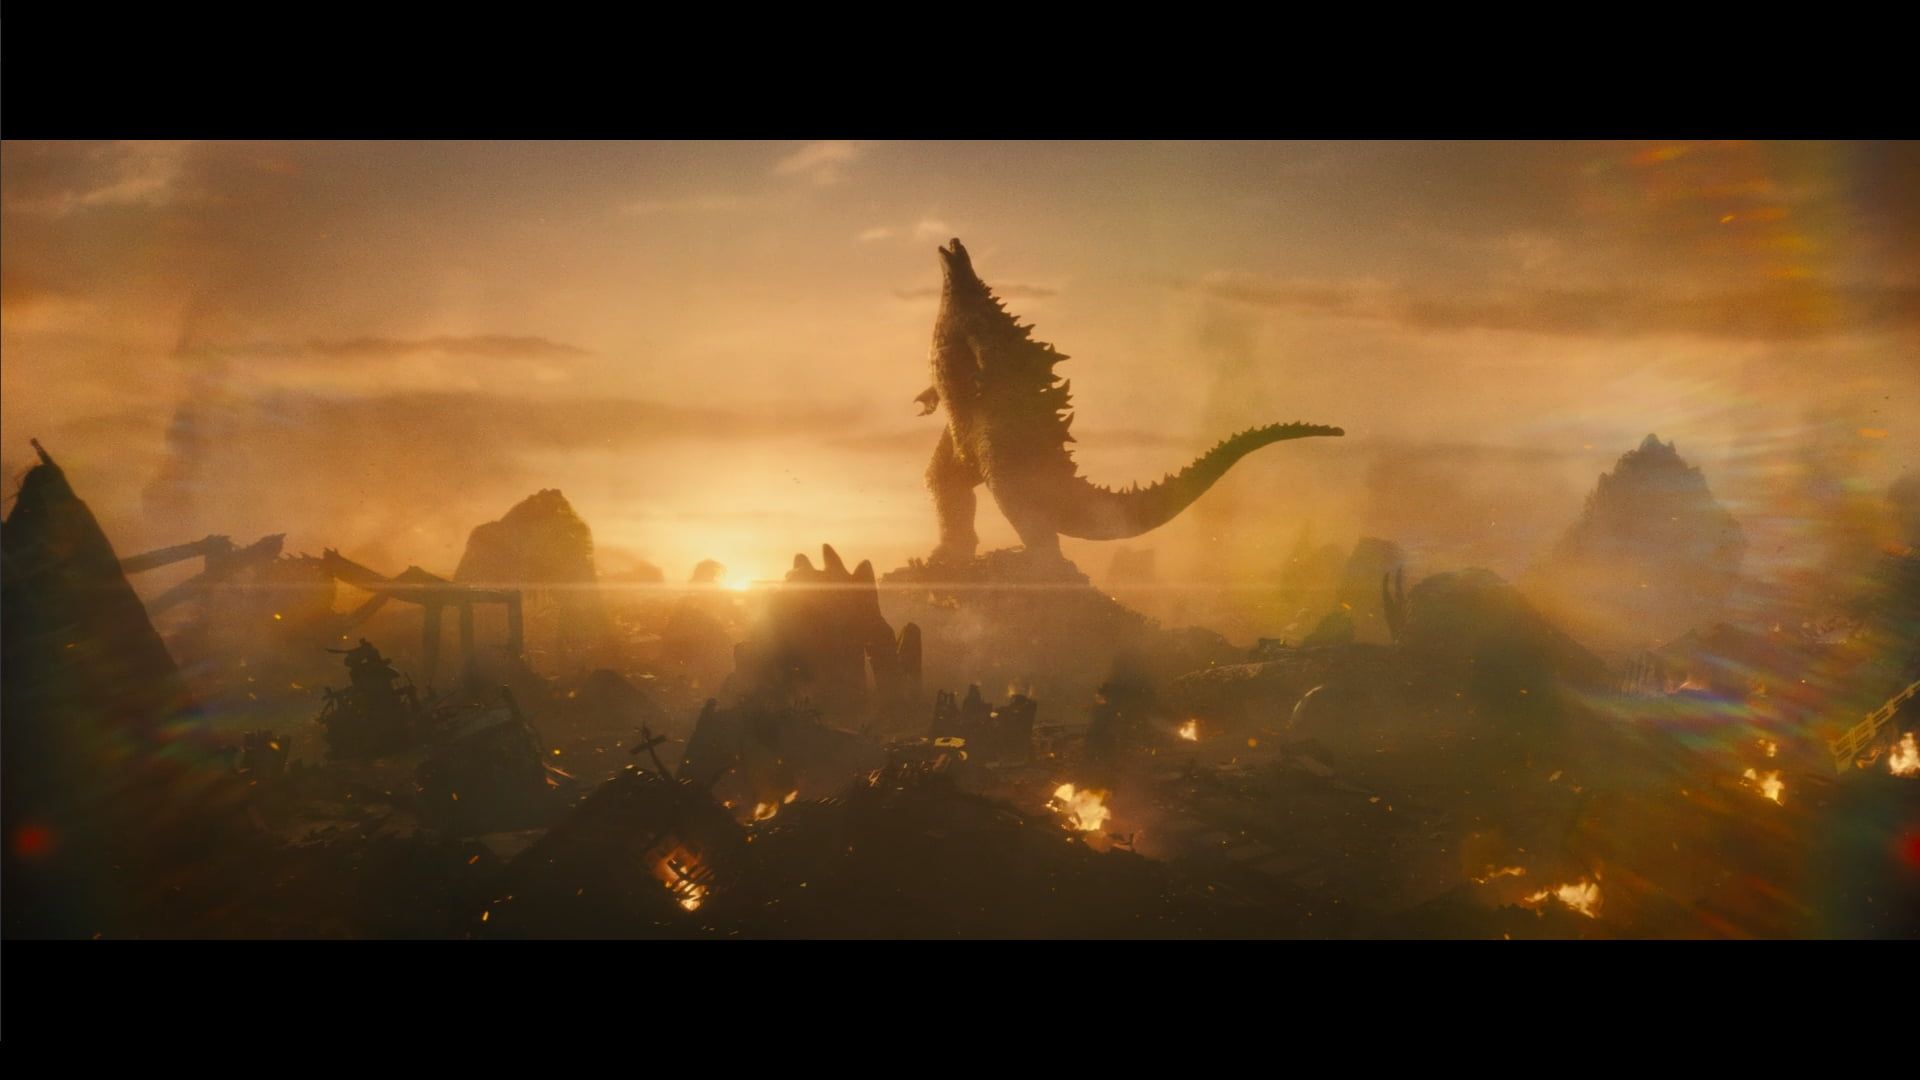 Kevin Vega On Guardado R Pido In Godzilla Wallpaper